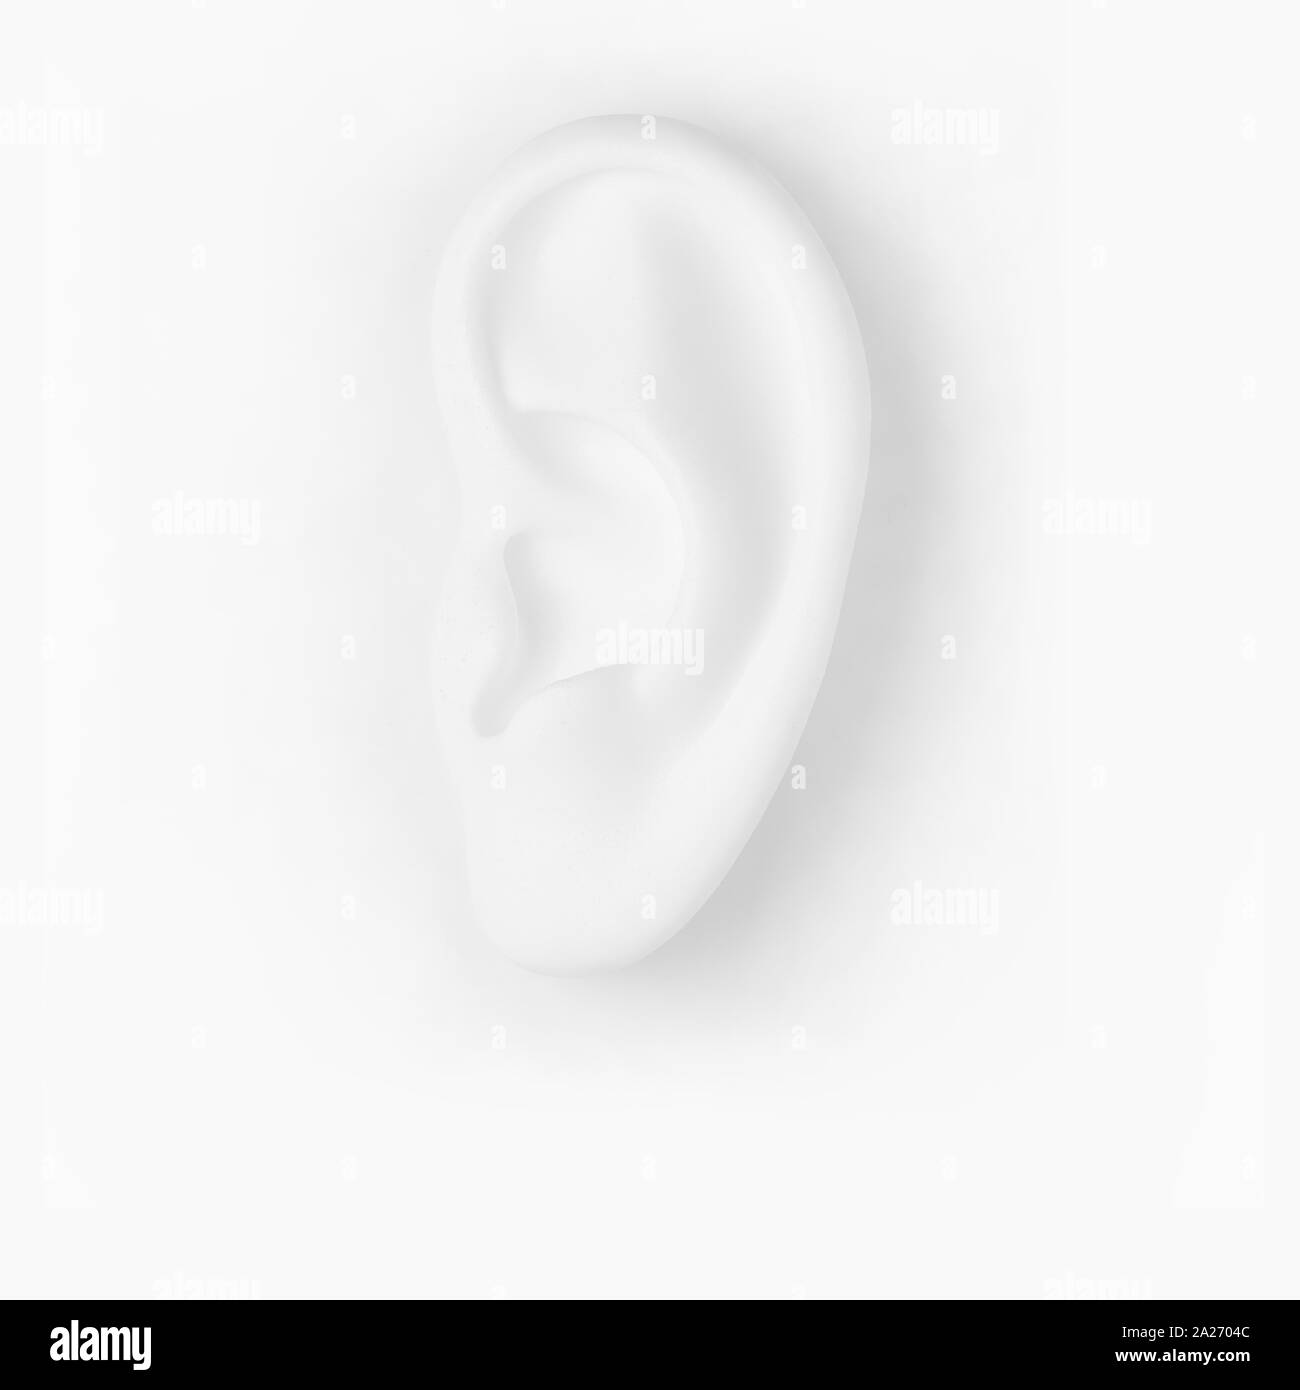 Ear white background Stock Photo